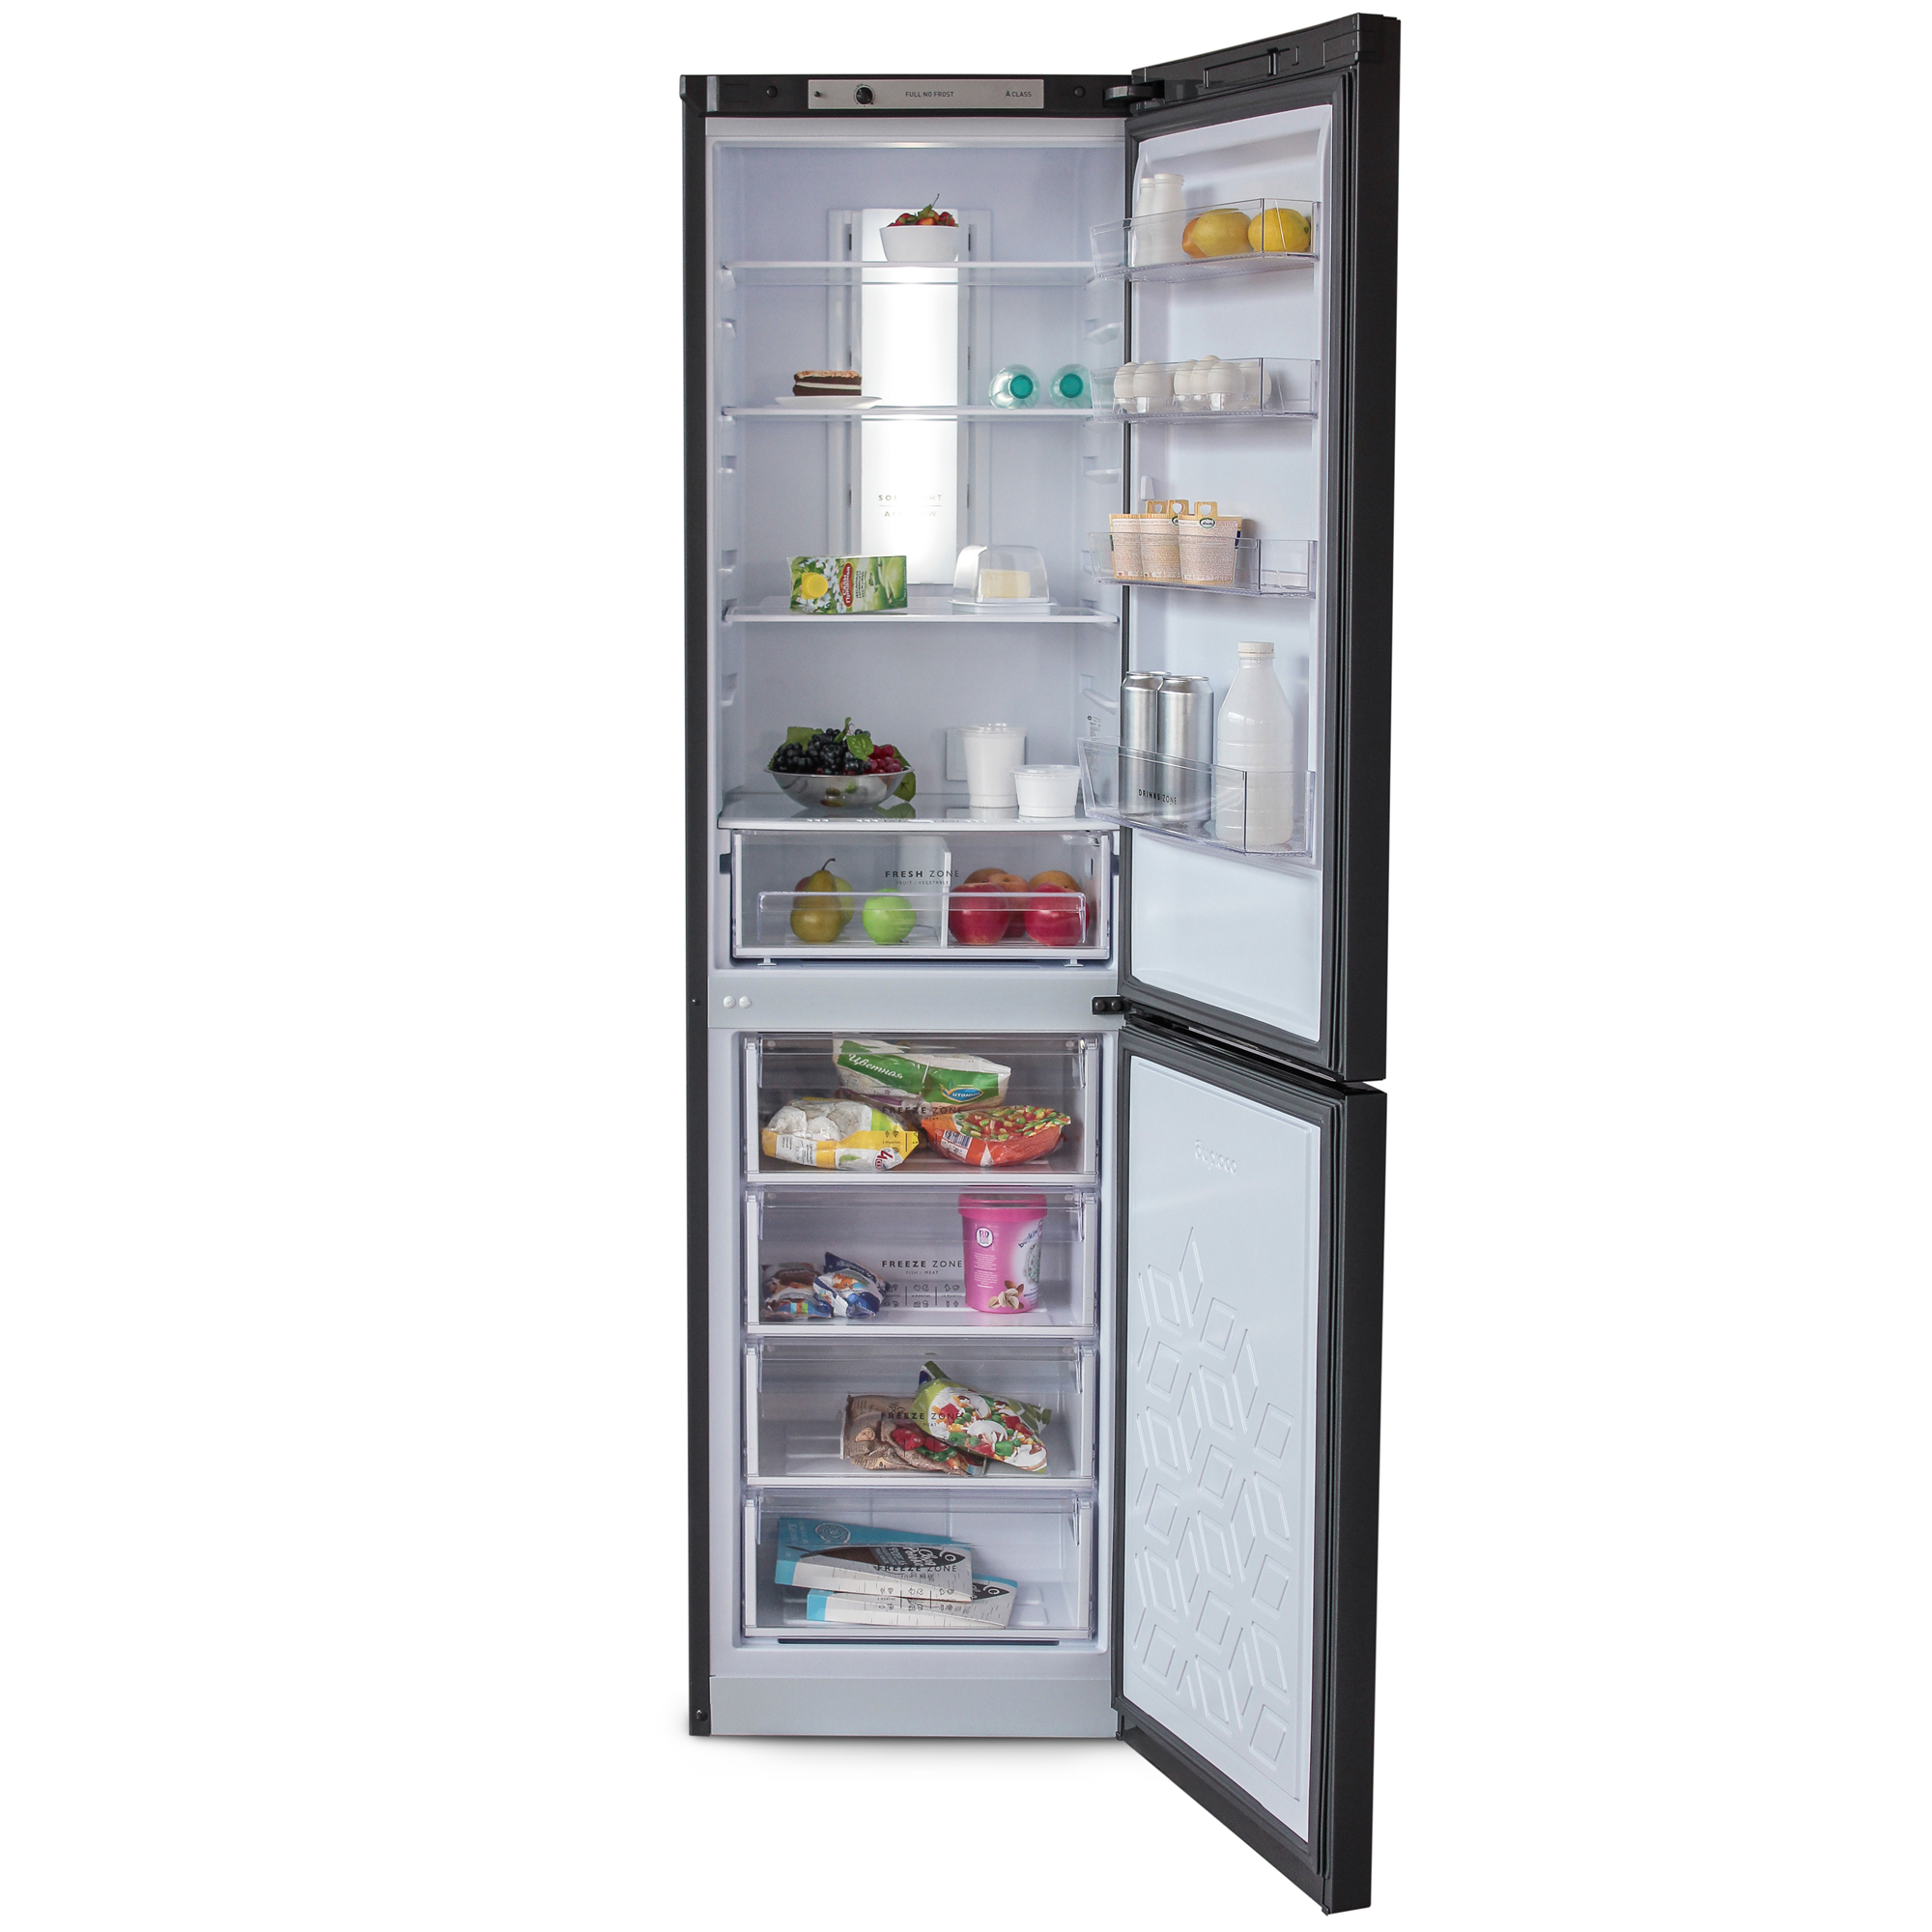 Холодильник бирюса 880nf. Бирюса w880nf. Холодильник Бирюса c880nf. Бирюса w880nf графит. Холодильник Бирюса b-880nf.